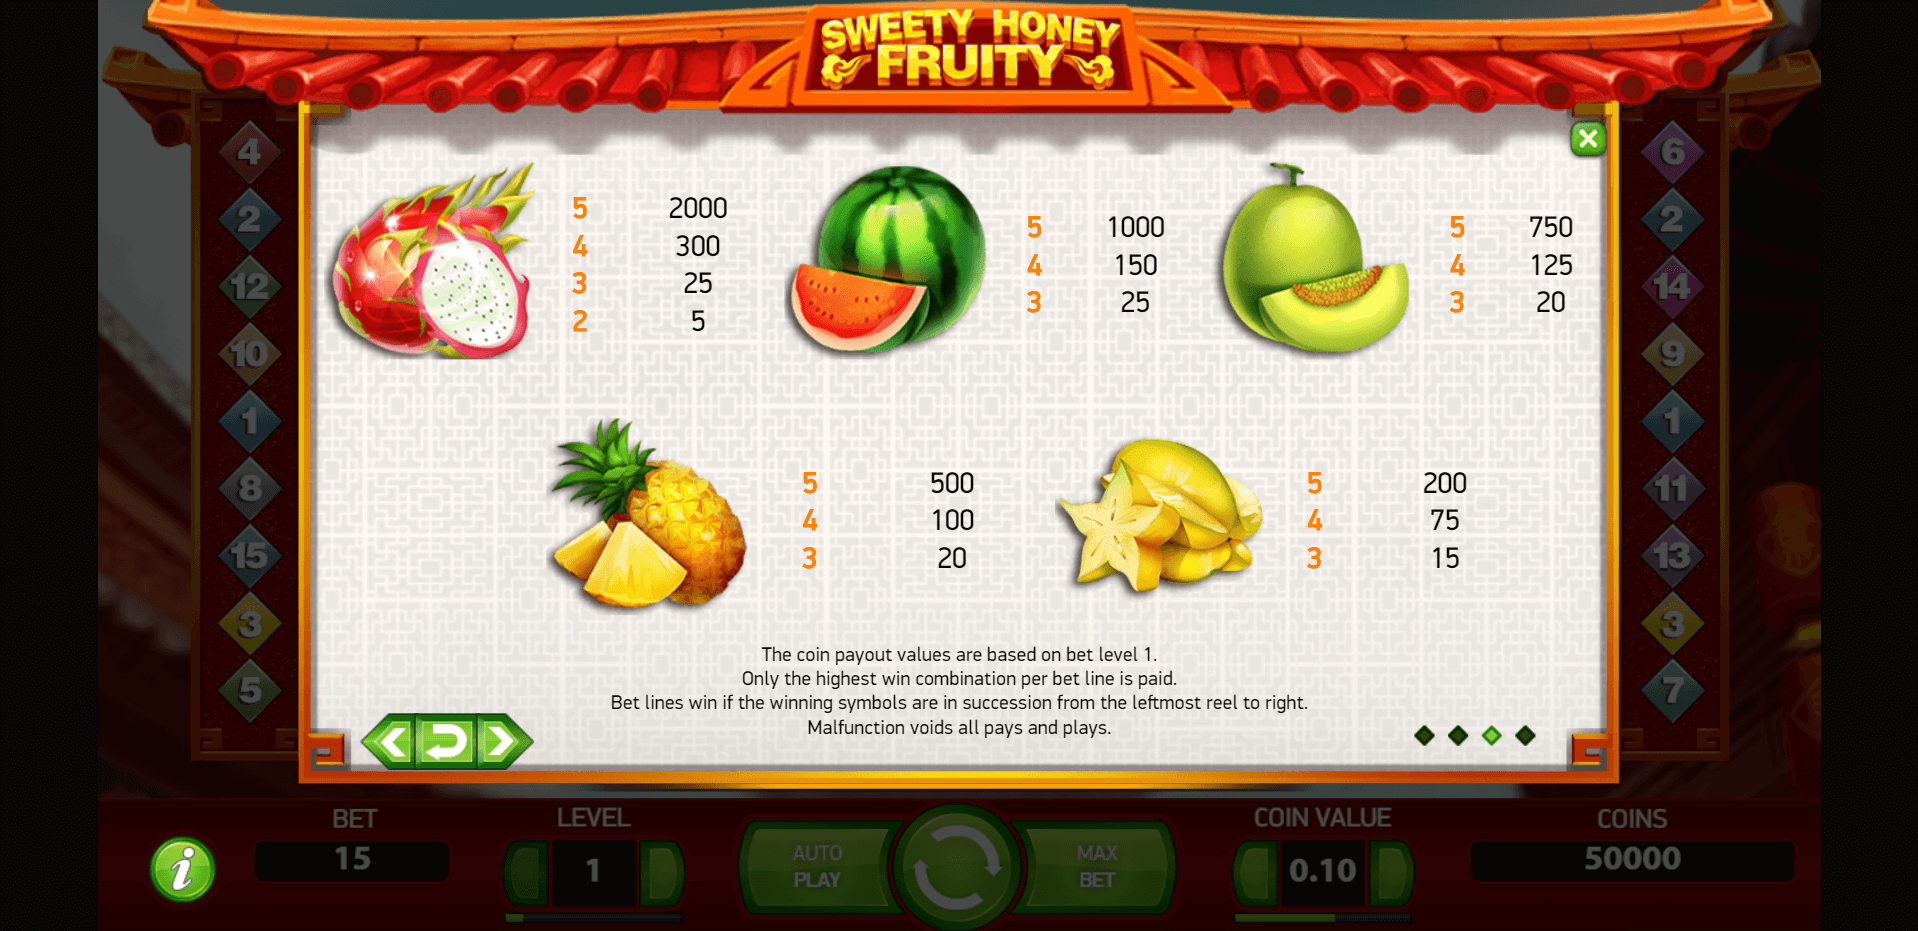 sweety honey fruity slot machine detail image 2